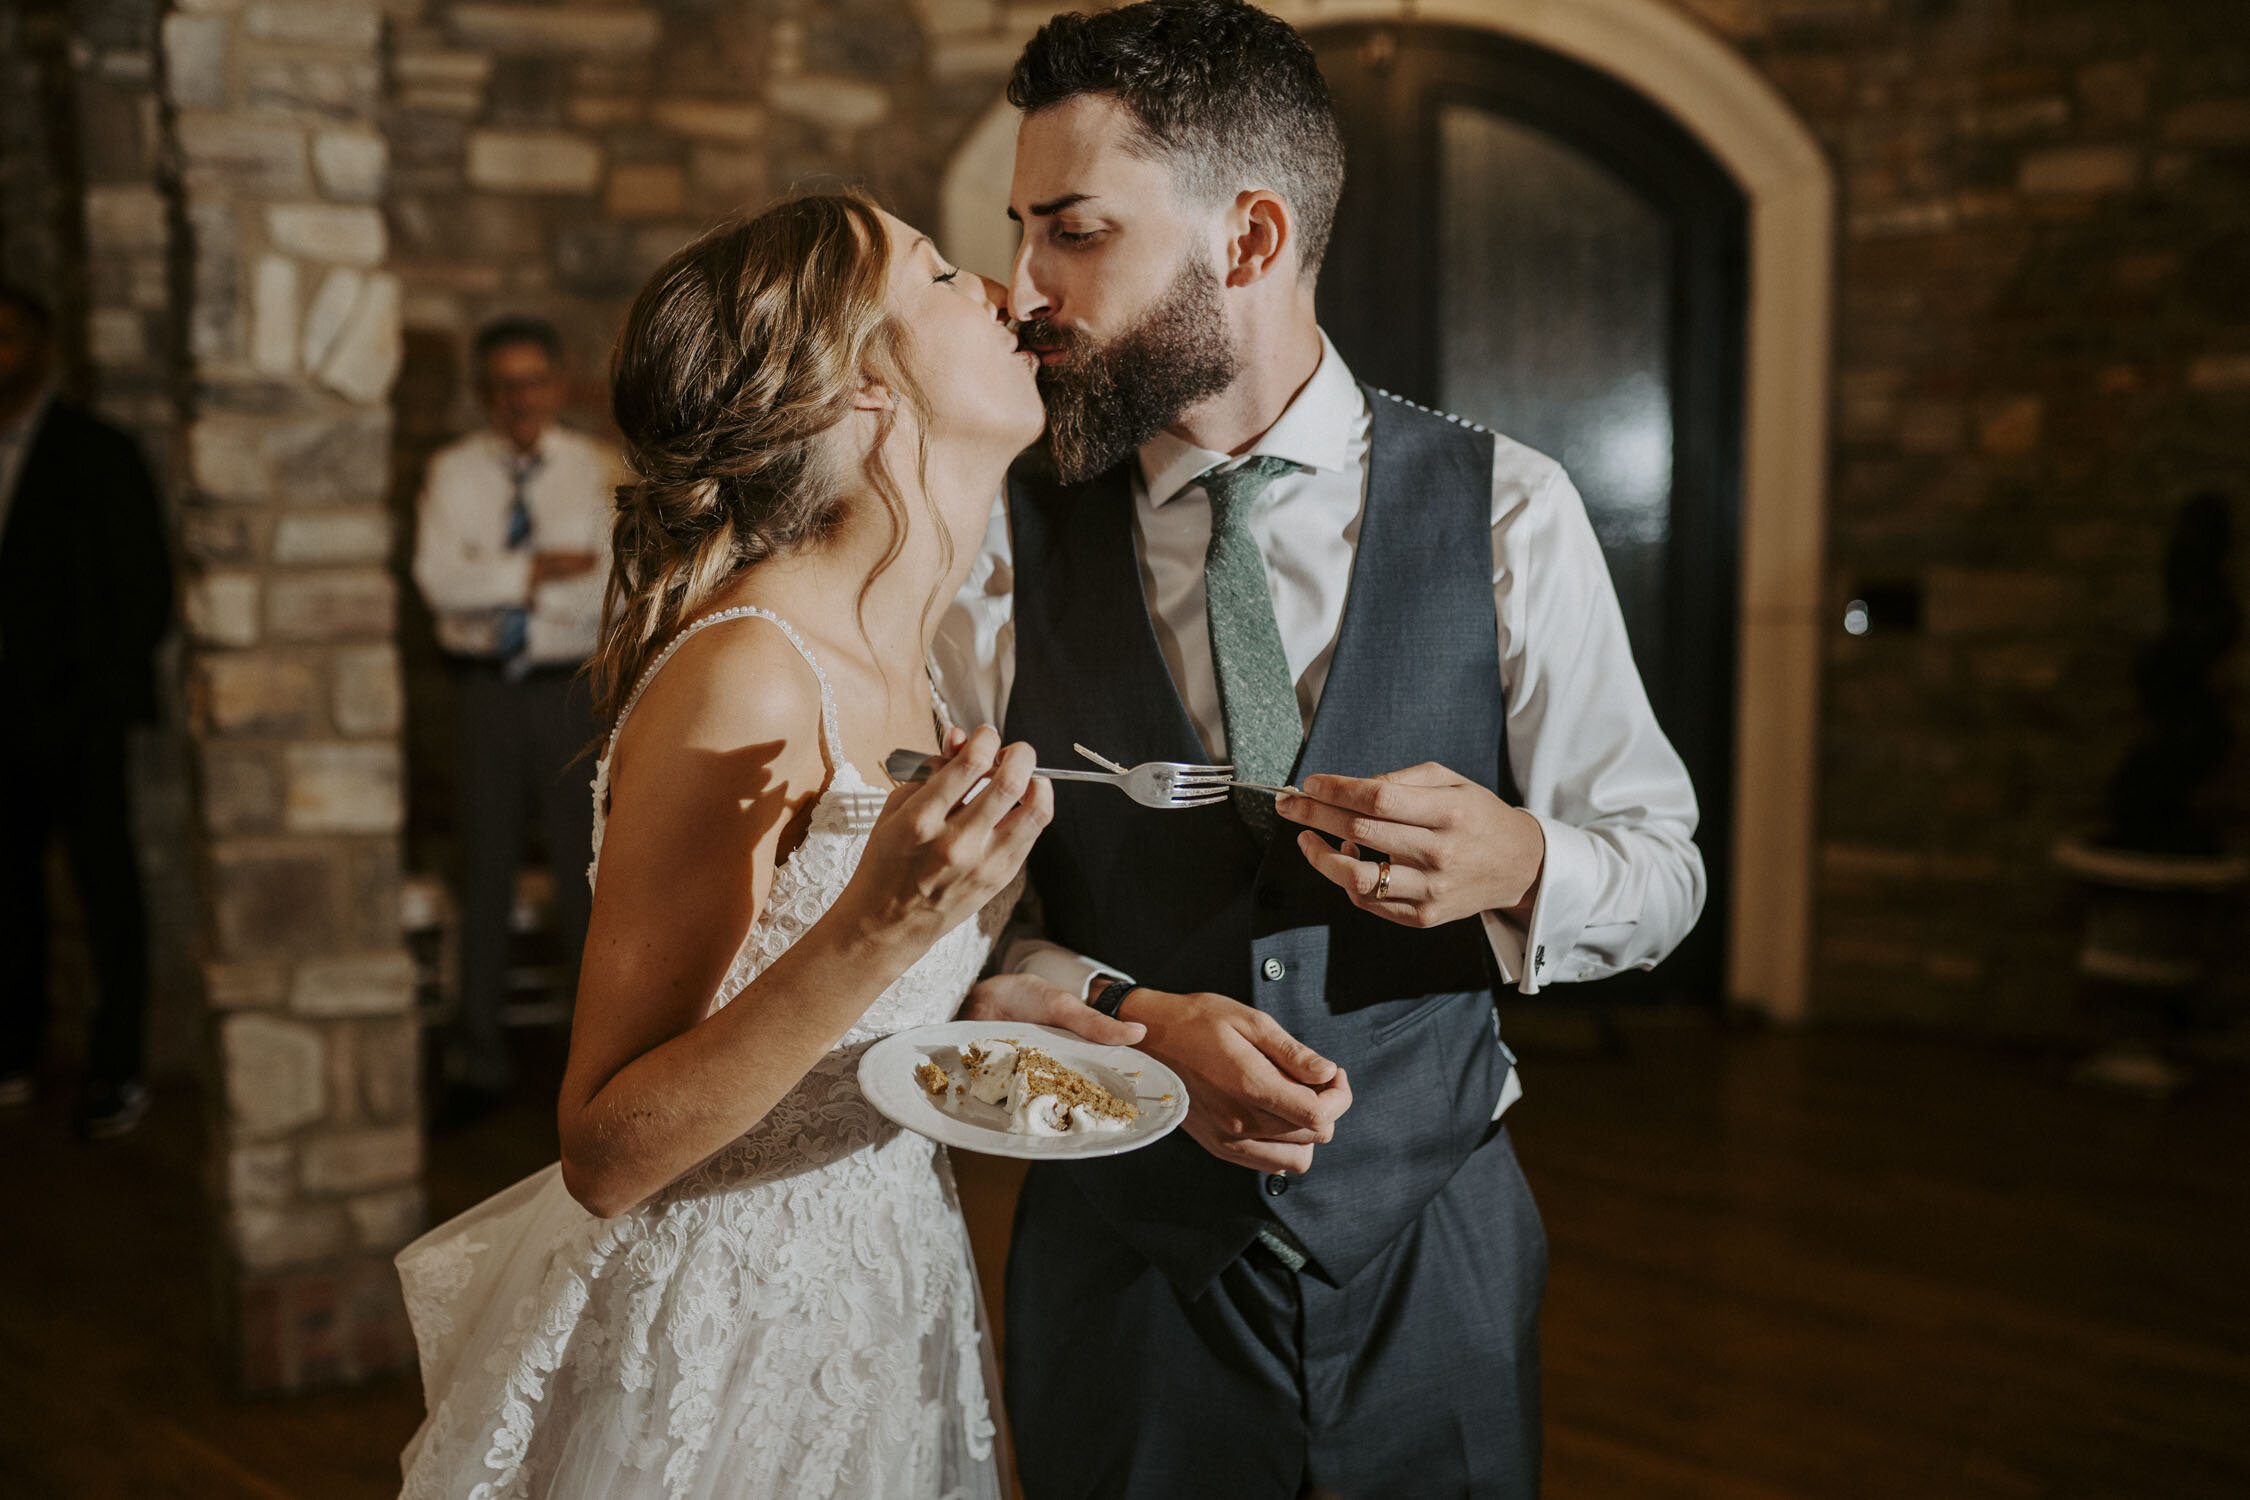 Rustic and Romantic Wedding Reception at Bella Collina | By Greensboro, NC Wedding Photographer: Kayli LaFon Photography